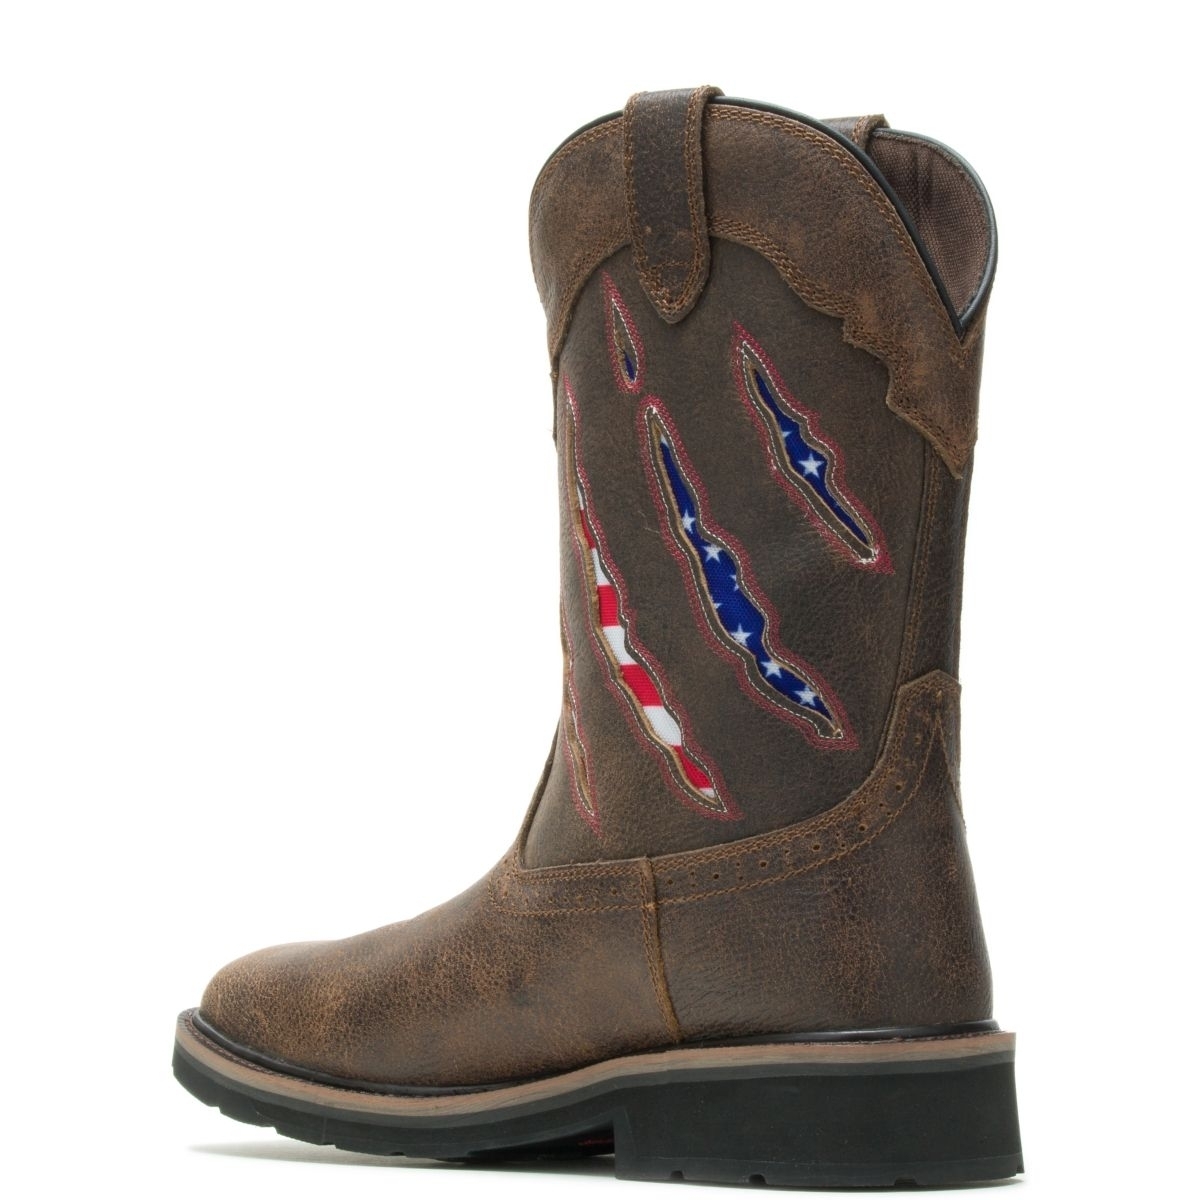 WOLVERINE Men's Rancher Claw Steel Toe Wellington Work Boot Brown/Flag - W201218 Flag/brown - Flag/brown, 11-W